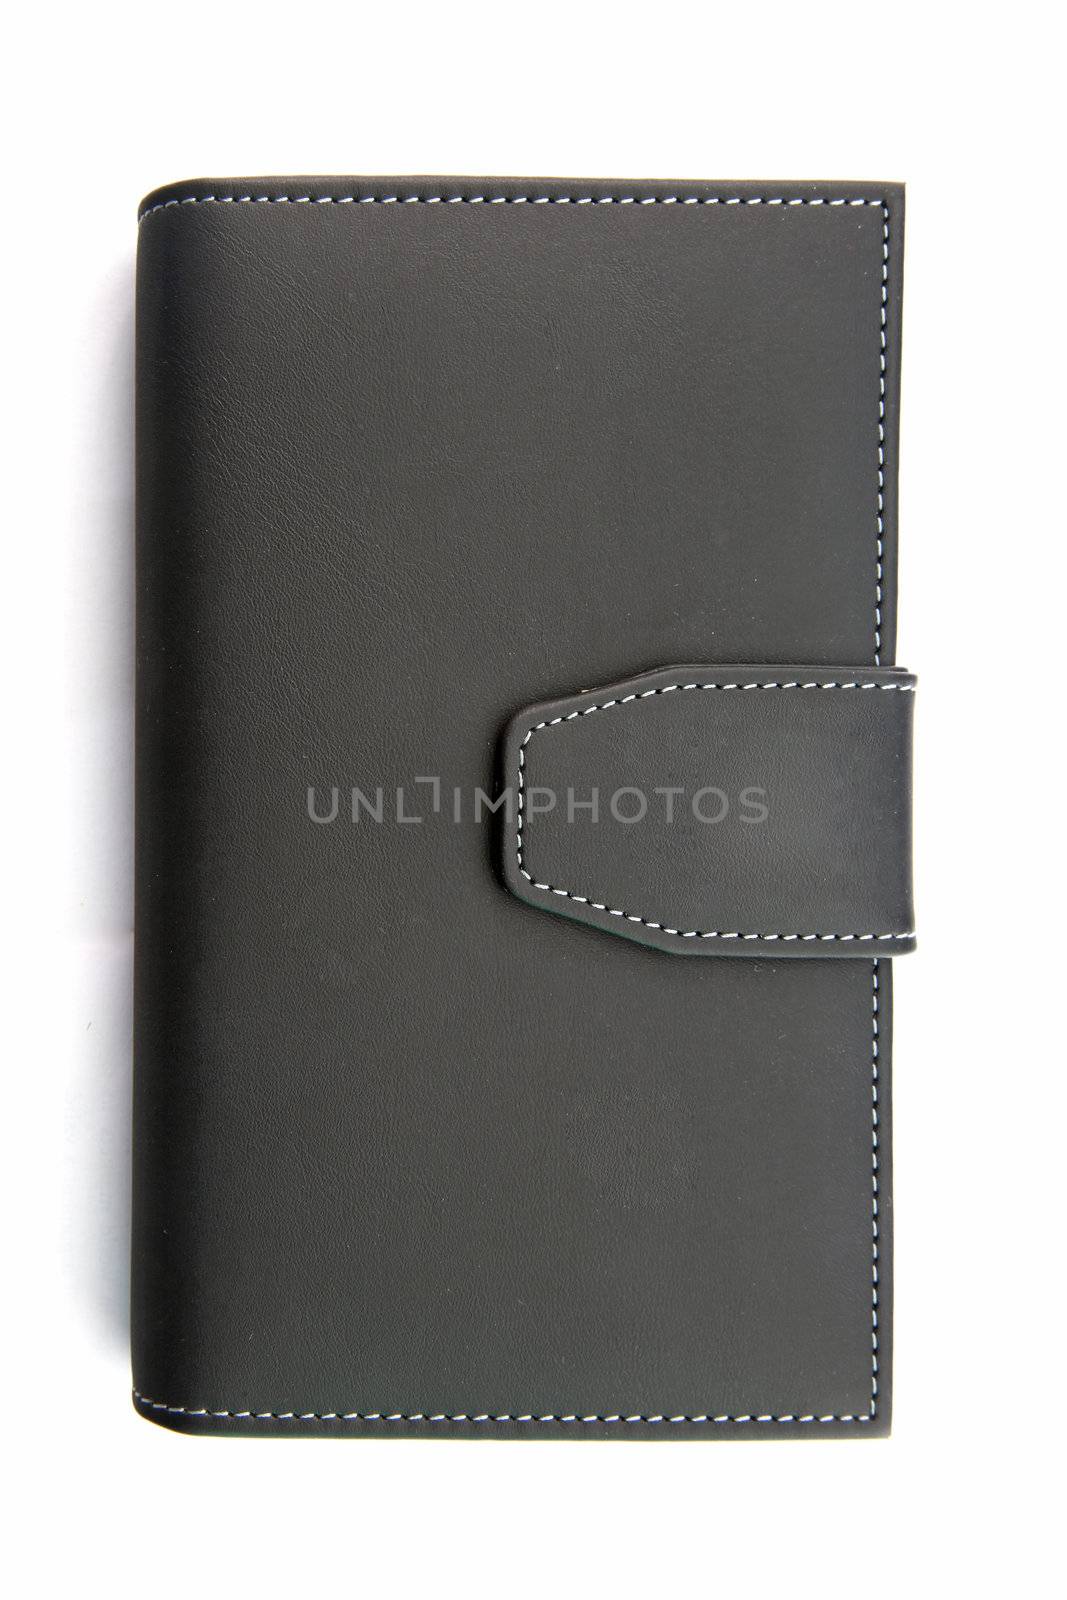 isolated of black fake leather holder notebook on white